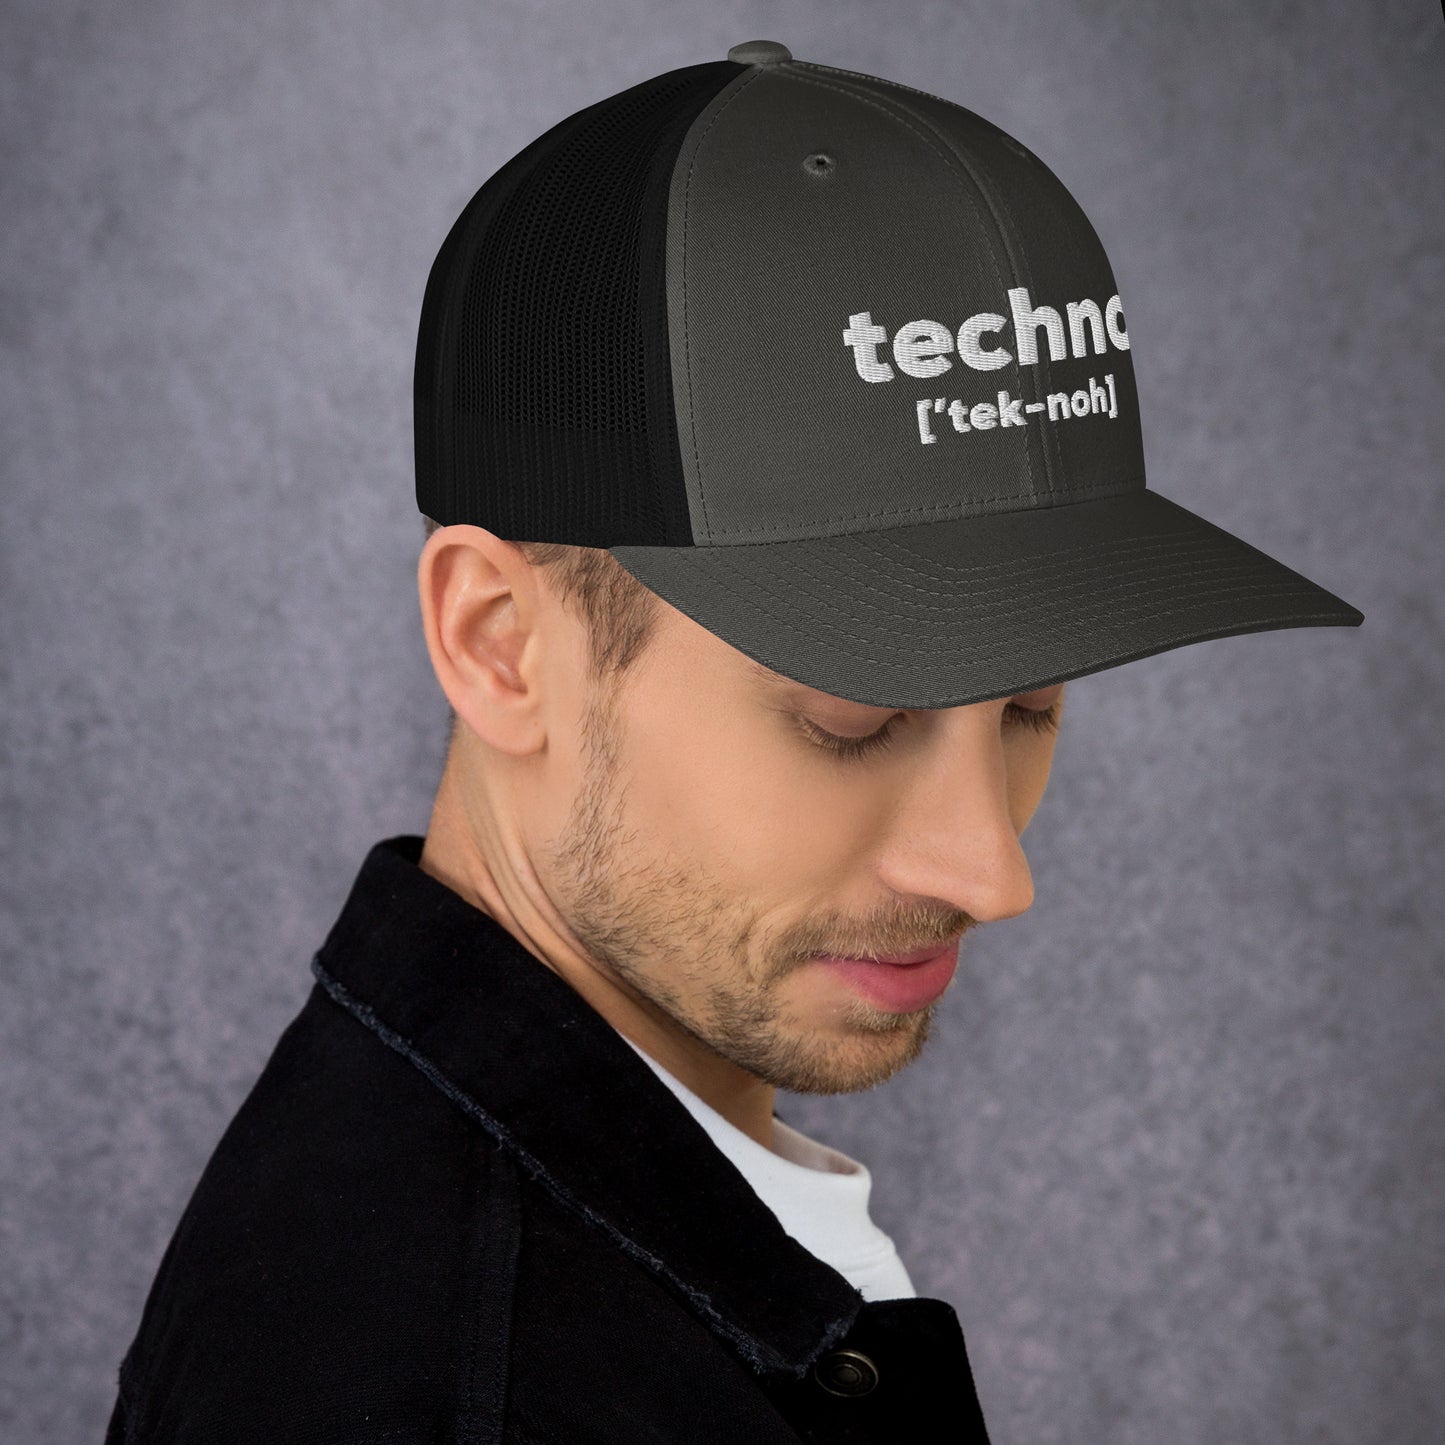 Techno ['tek-noh] Pronunciation - Trucker Hat